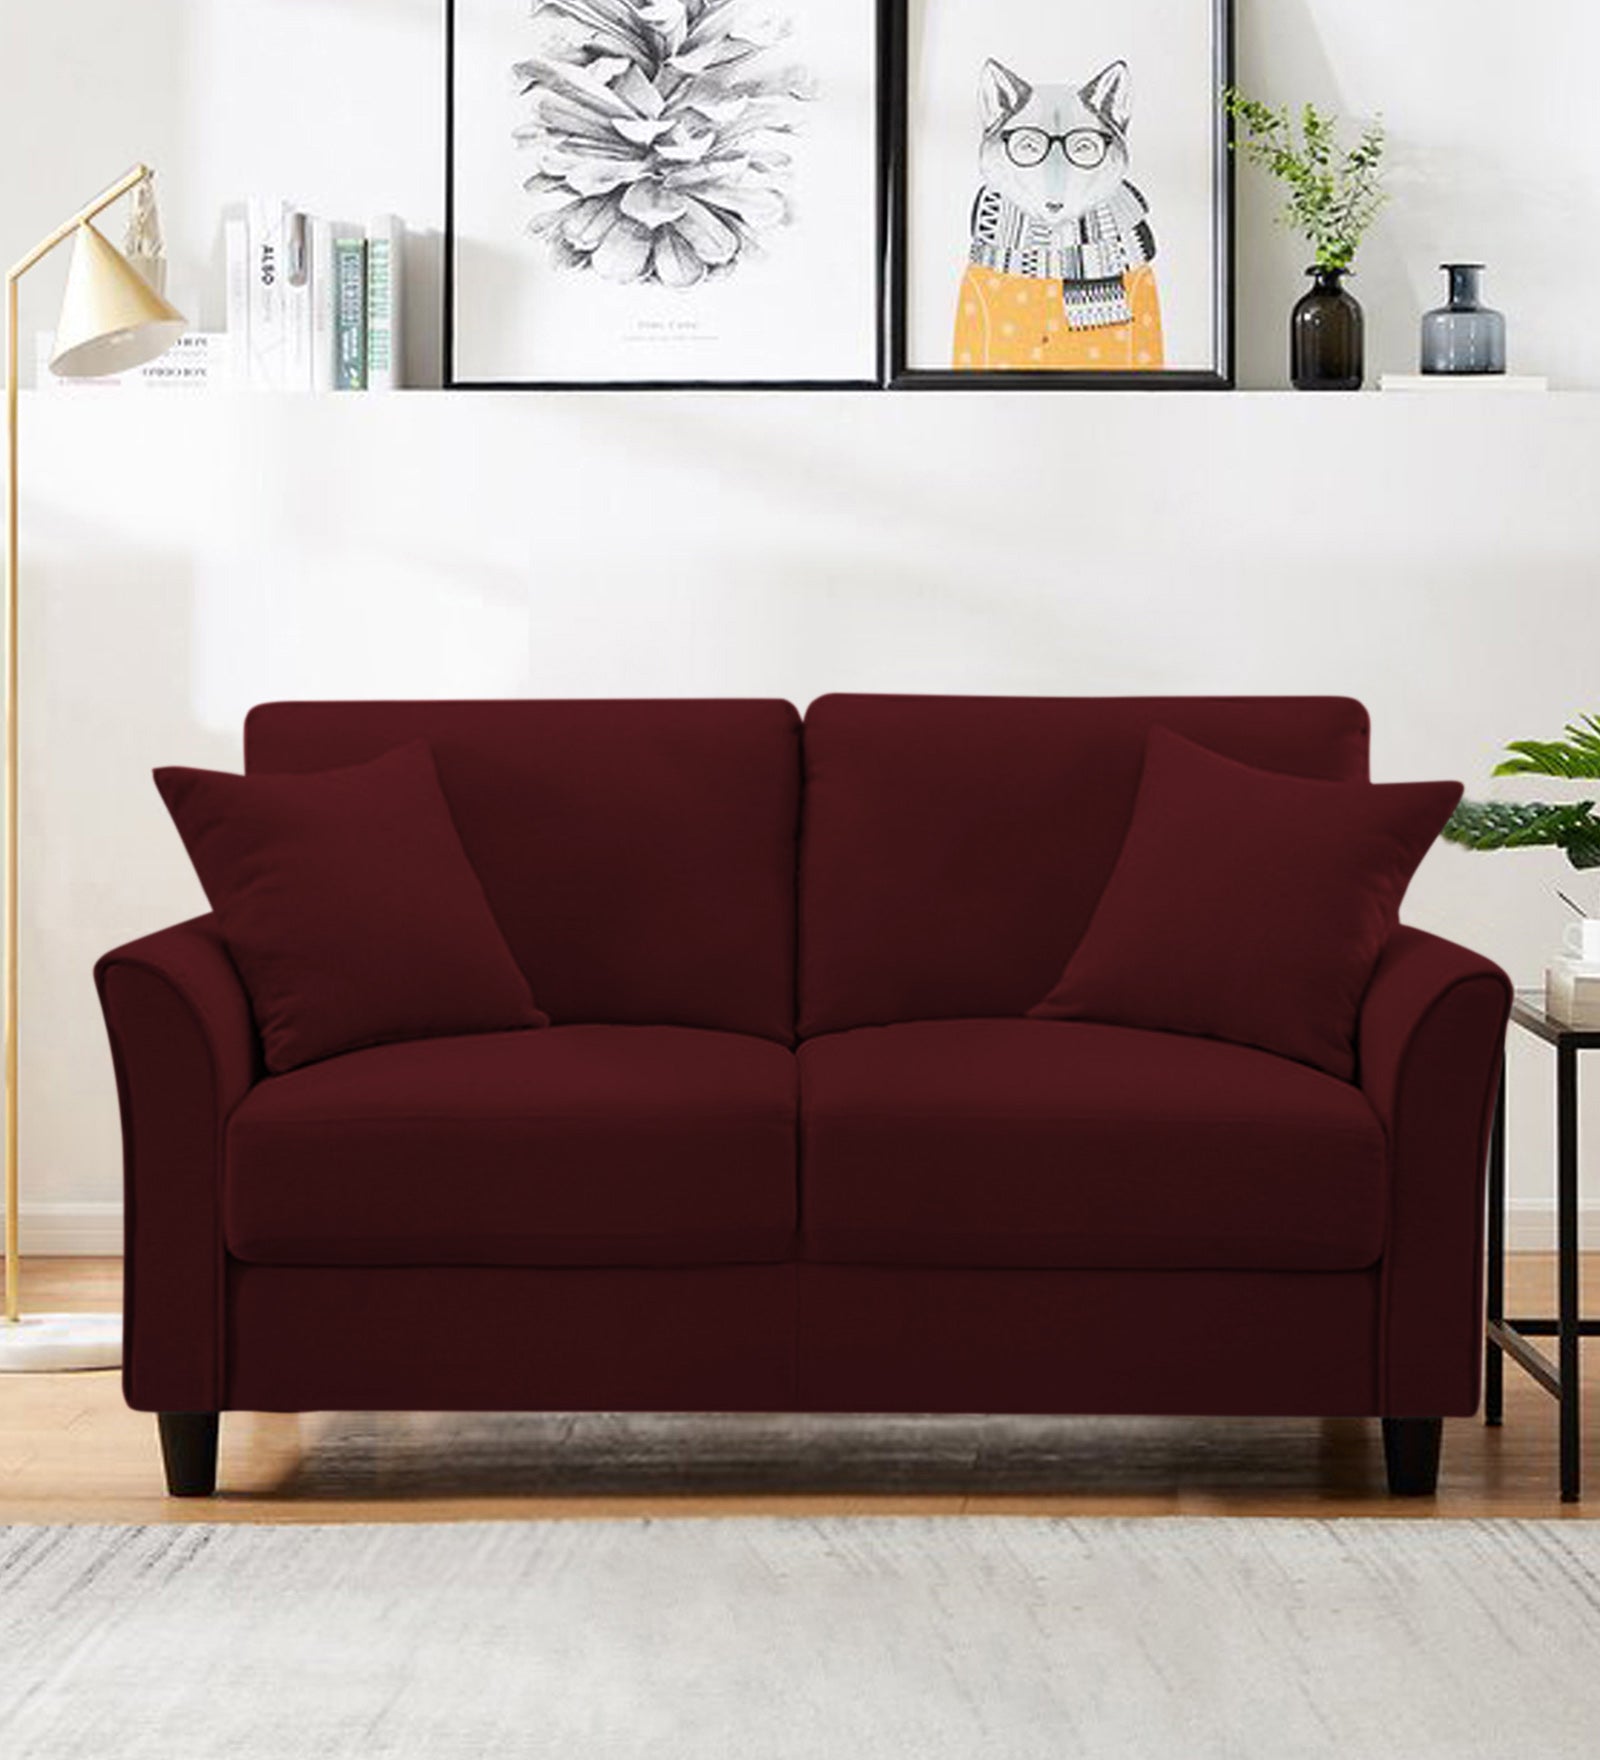 Daroo Velvet 2 Seater Sofa In Blood Maroon Colour